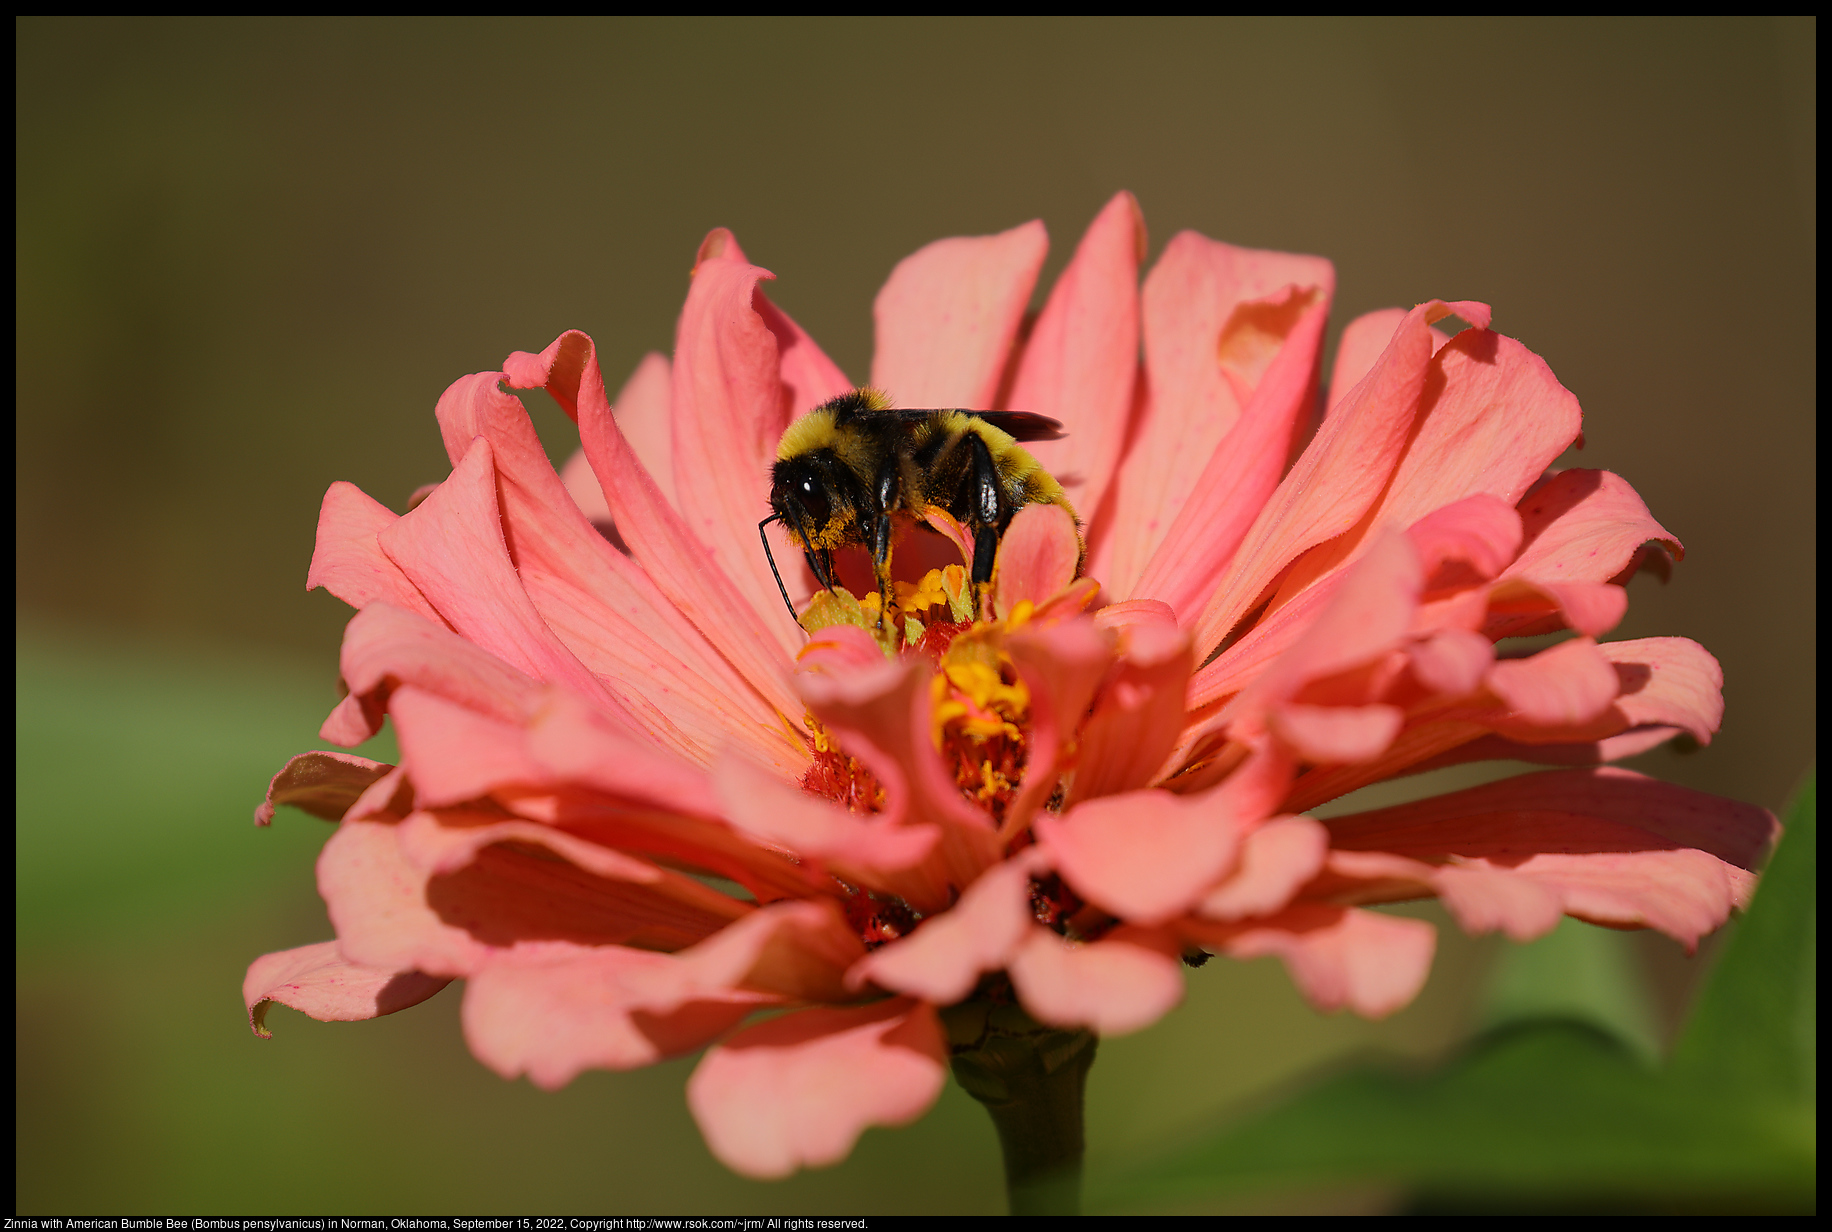 Zinnia with American Bumble Bee (Bombus pensylvanicus) in Norman, Oklahoma, September 15, 2022